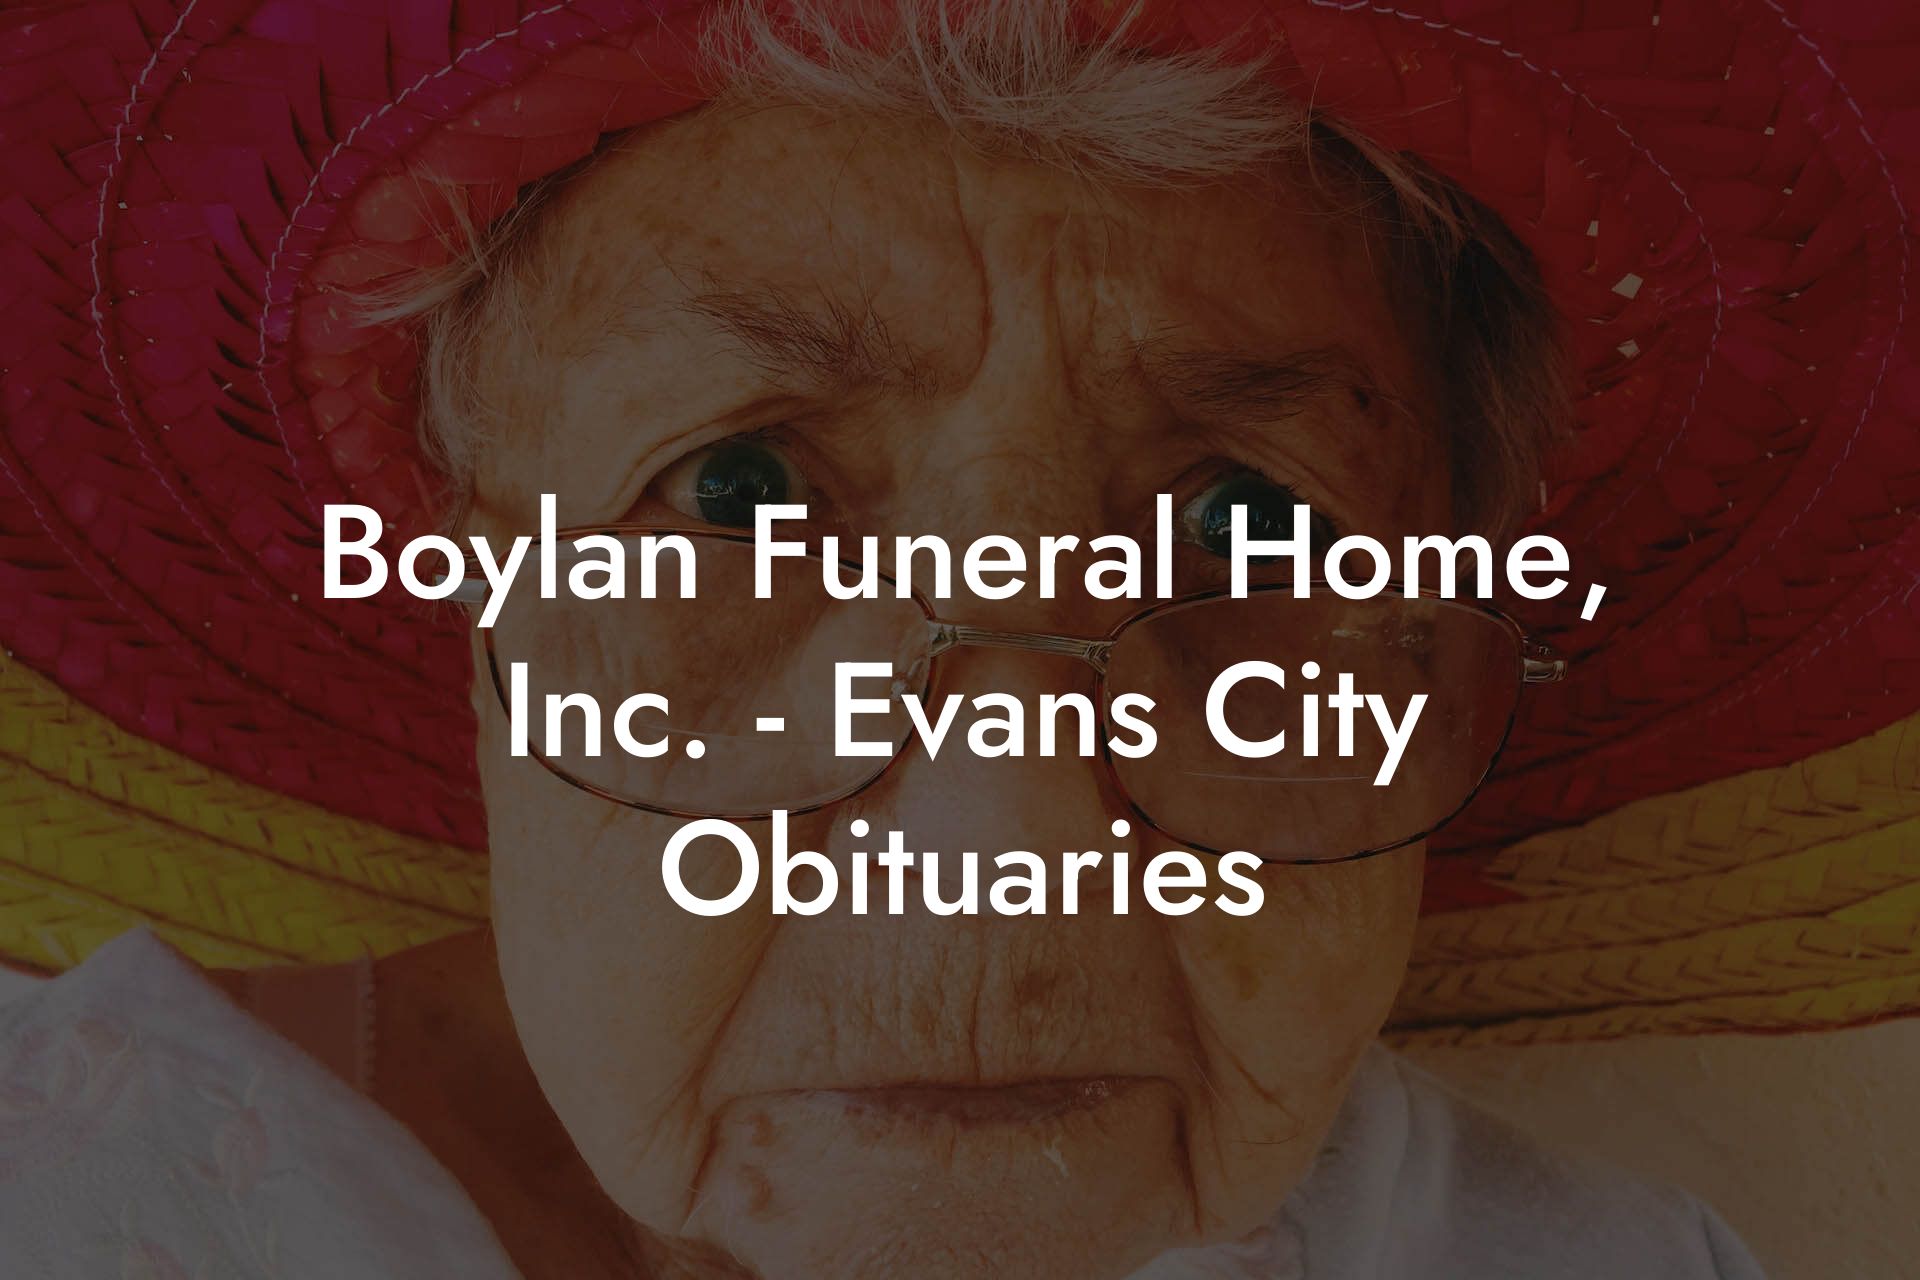 Boylan Funeral Home, Inc. - Evans City Obituaries